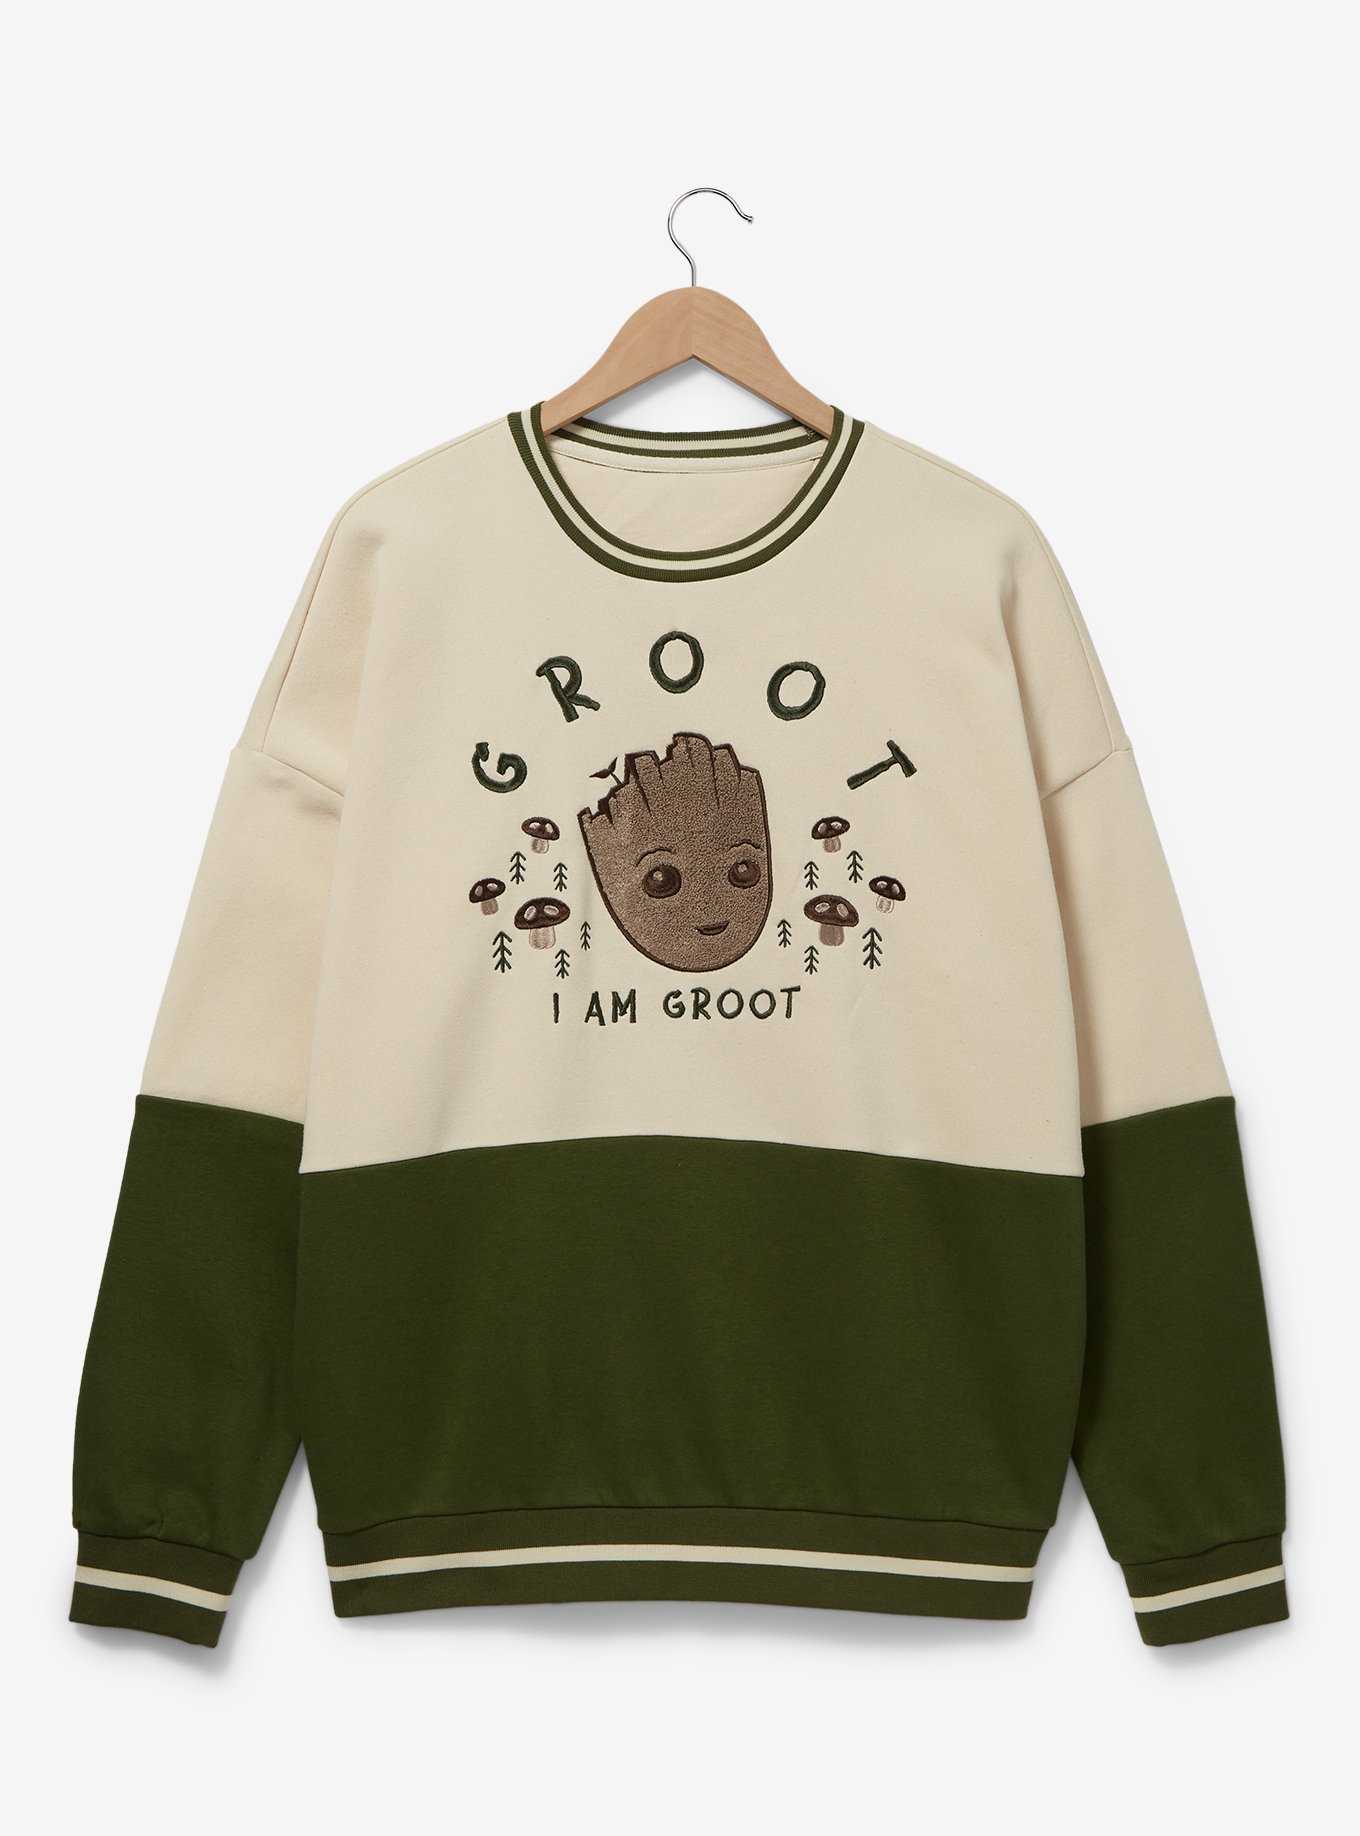 GOTG Gals on the Go Matchbox Beige Hoodie Sweatshirt, Custom prints store